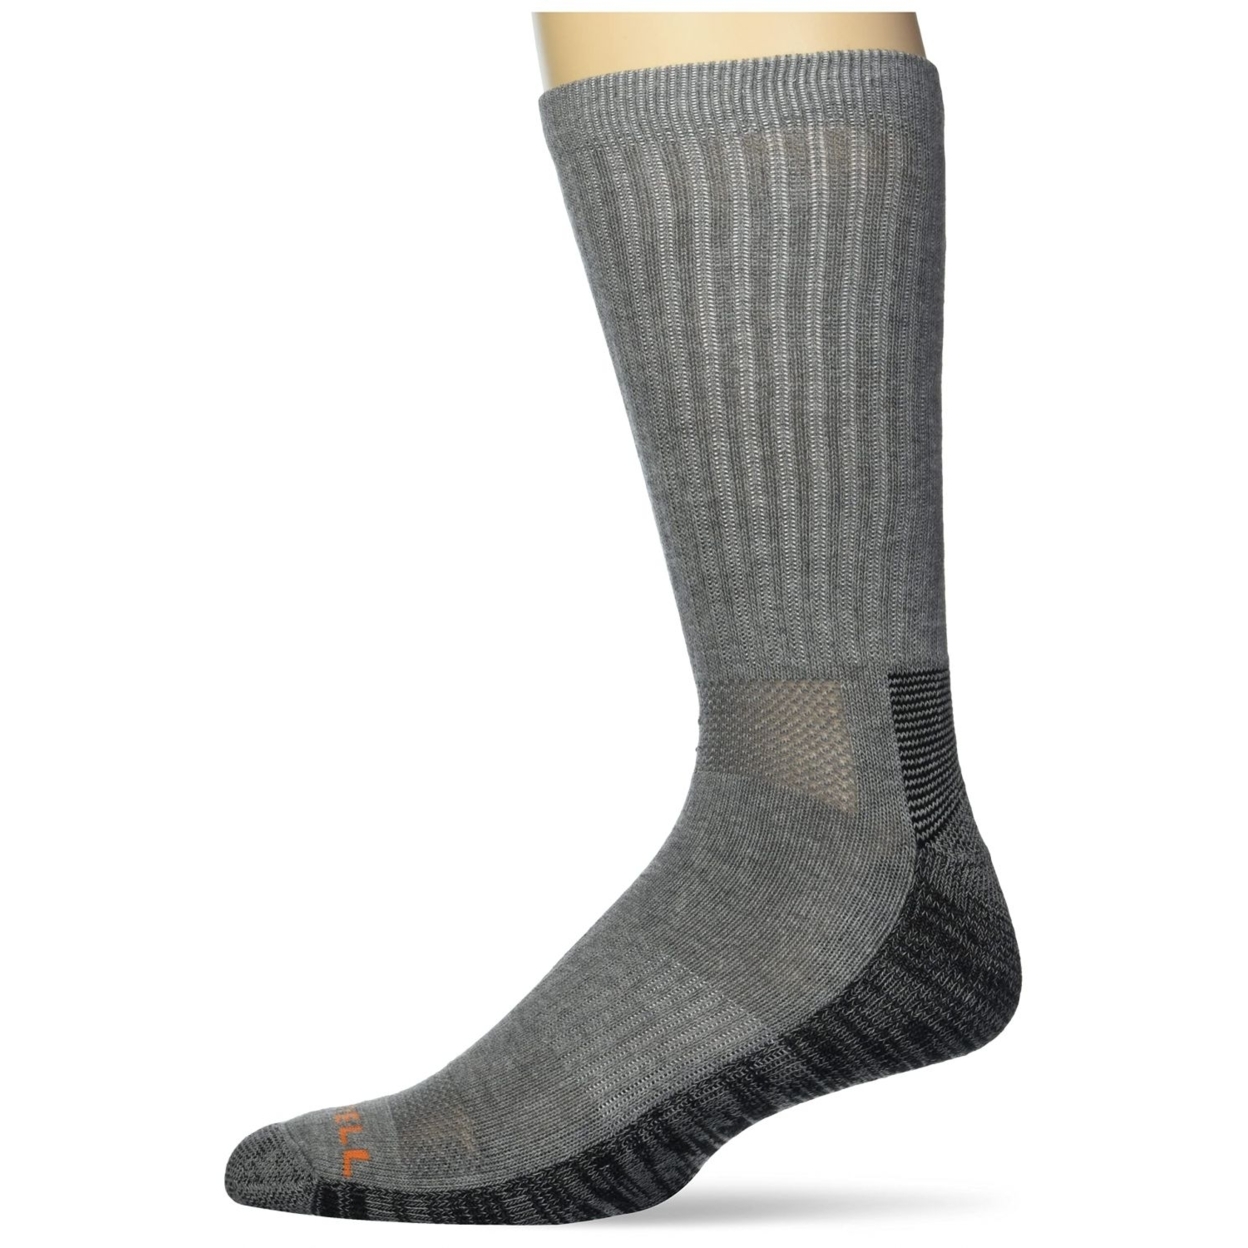 Merrell Men's And Women's Durable Everyday Work Crew Socks - Unisex 6 Pair Pack - Arch Support And Anti-Odor Cotton GRAYH - GRAYH, Medium-La